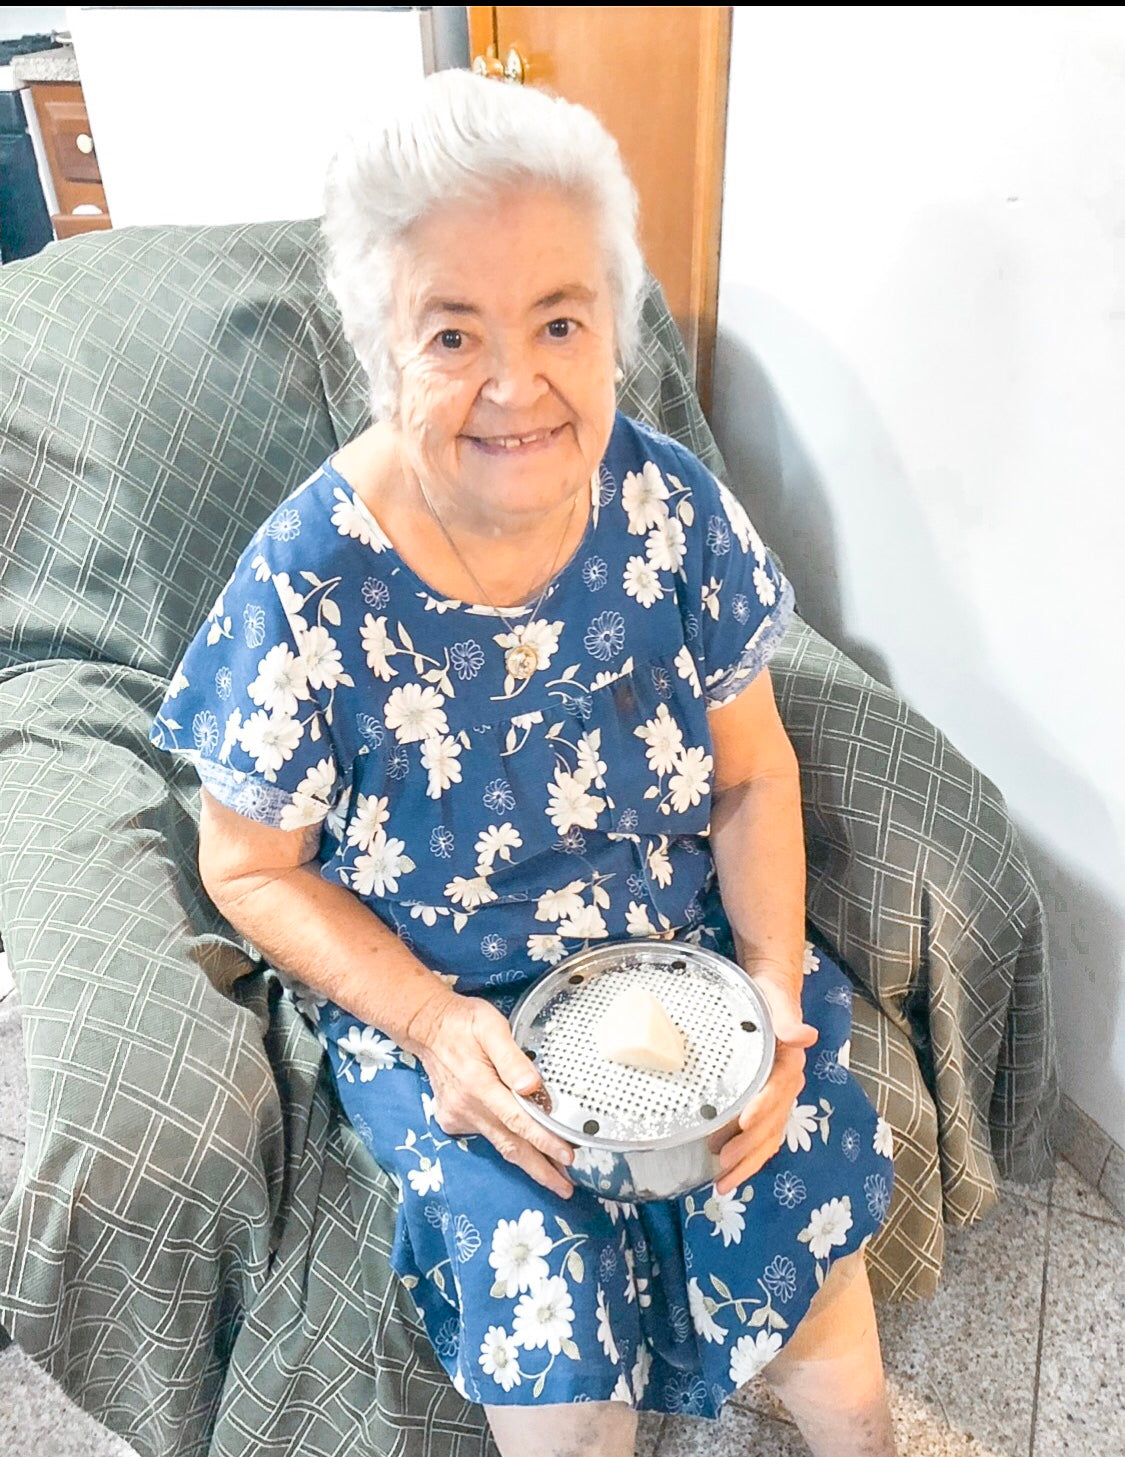 Nonna Knives - White – La Bottega della Nonna